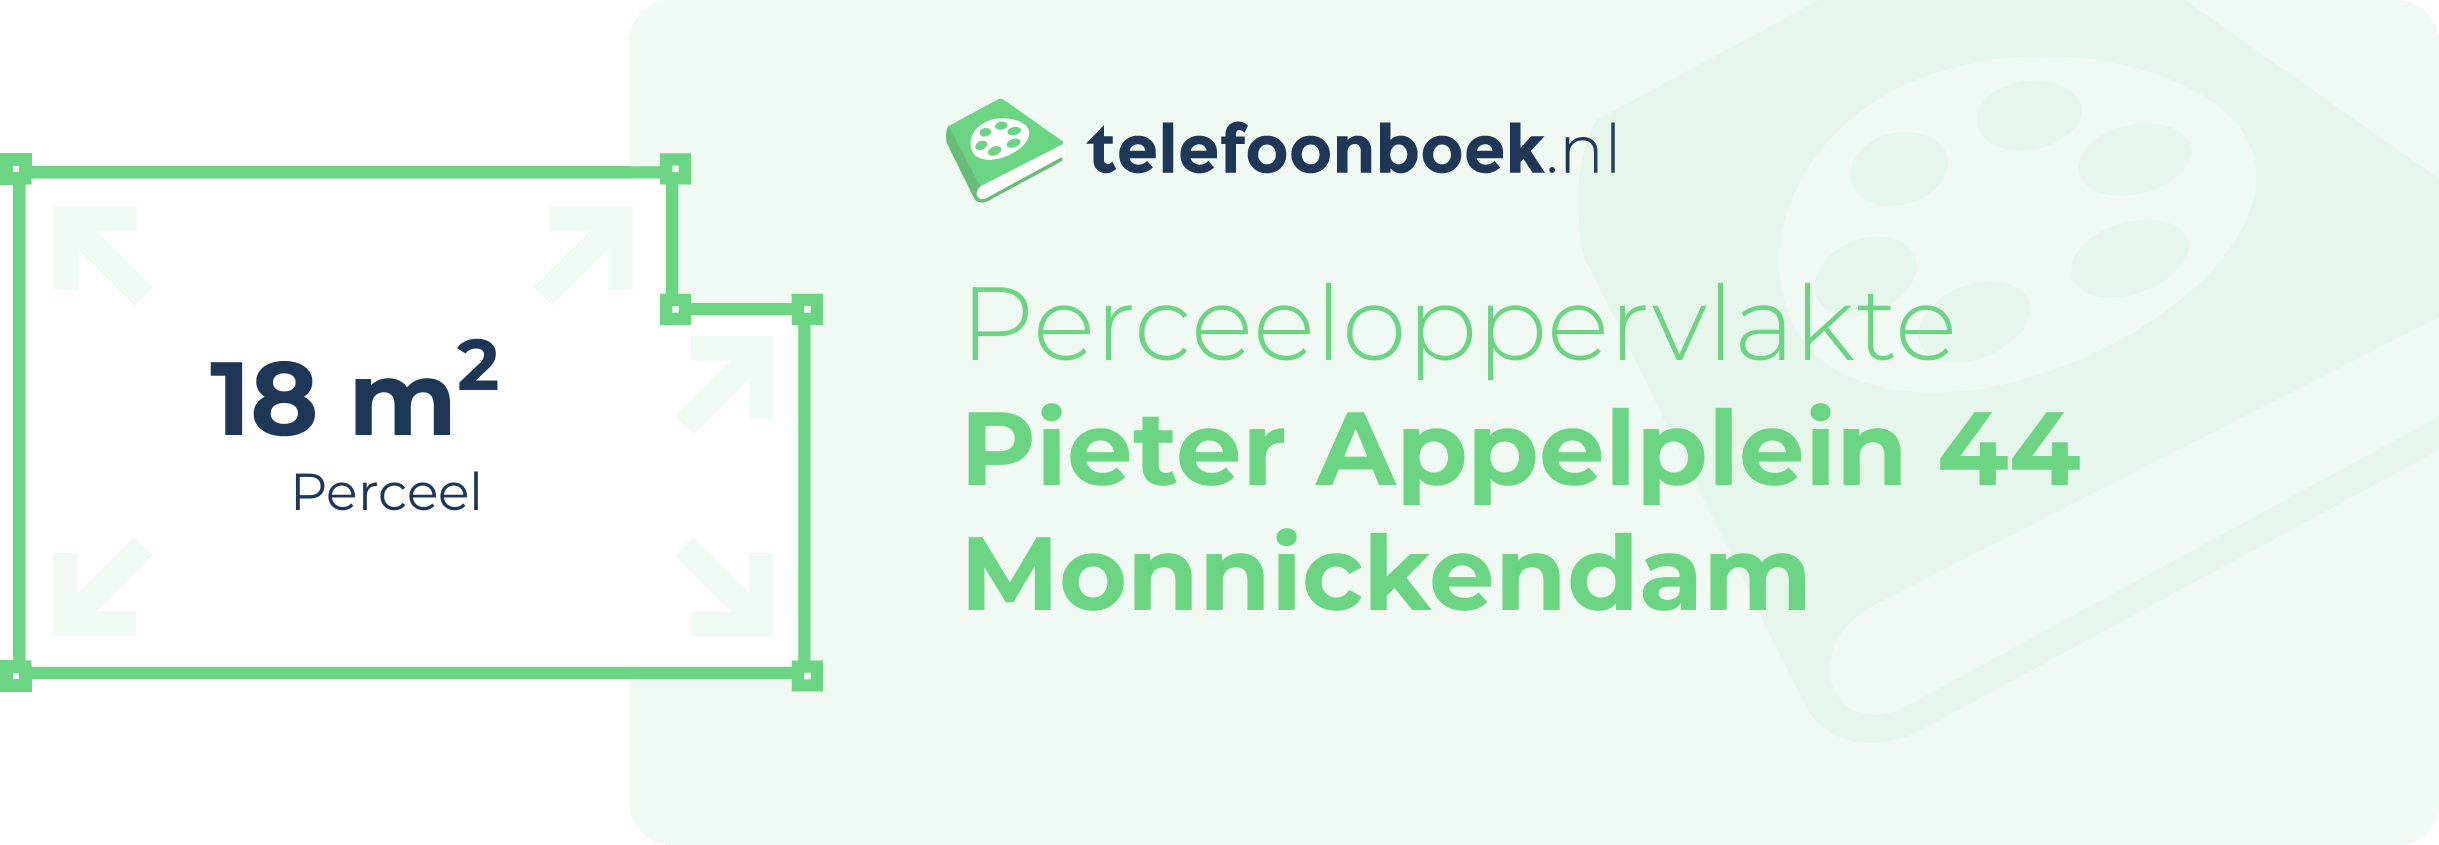 Perceeloppervlakte Pieter Appelplein 44 Monnickendam